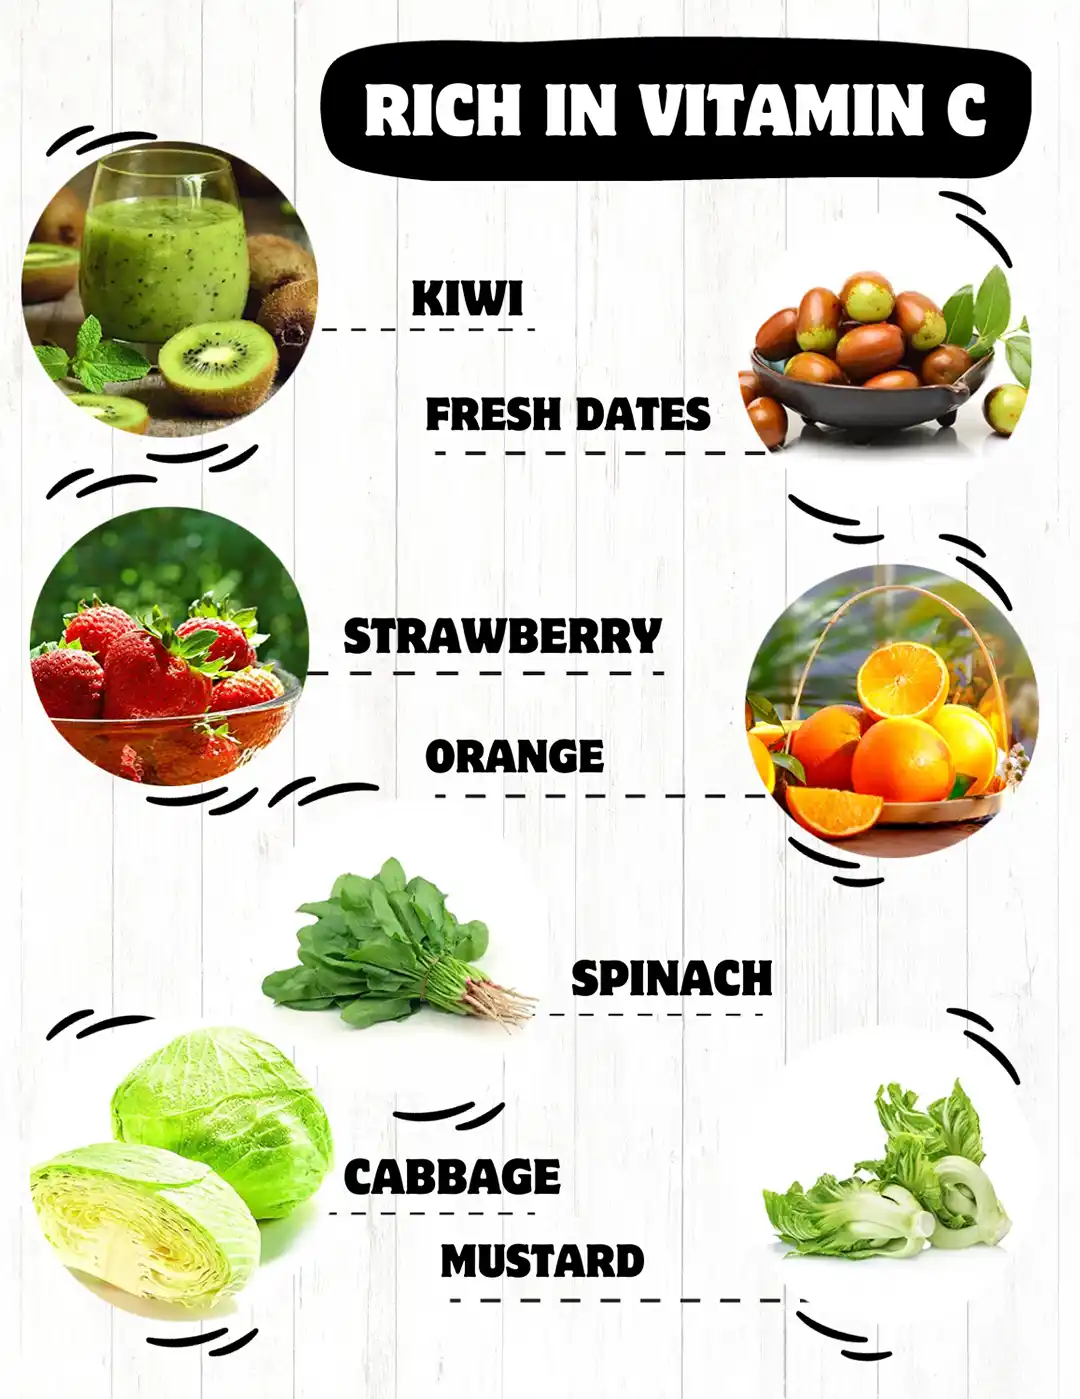 Foods rich in vitamin C